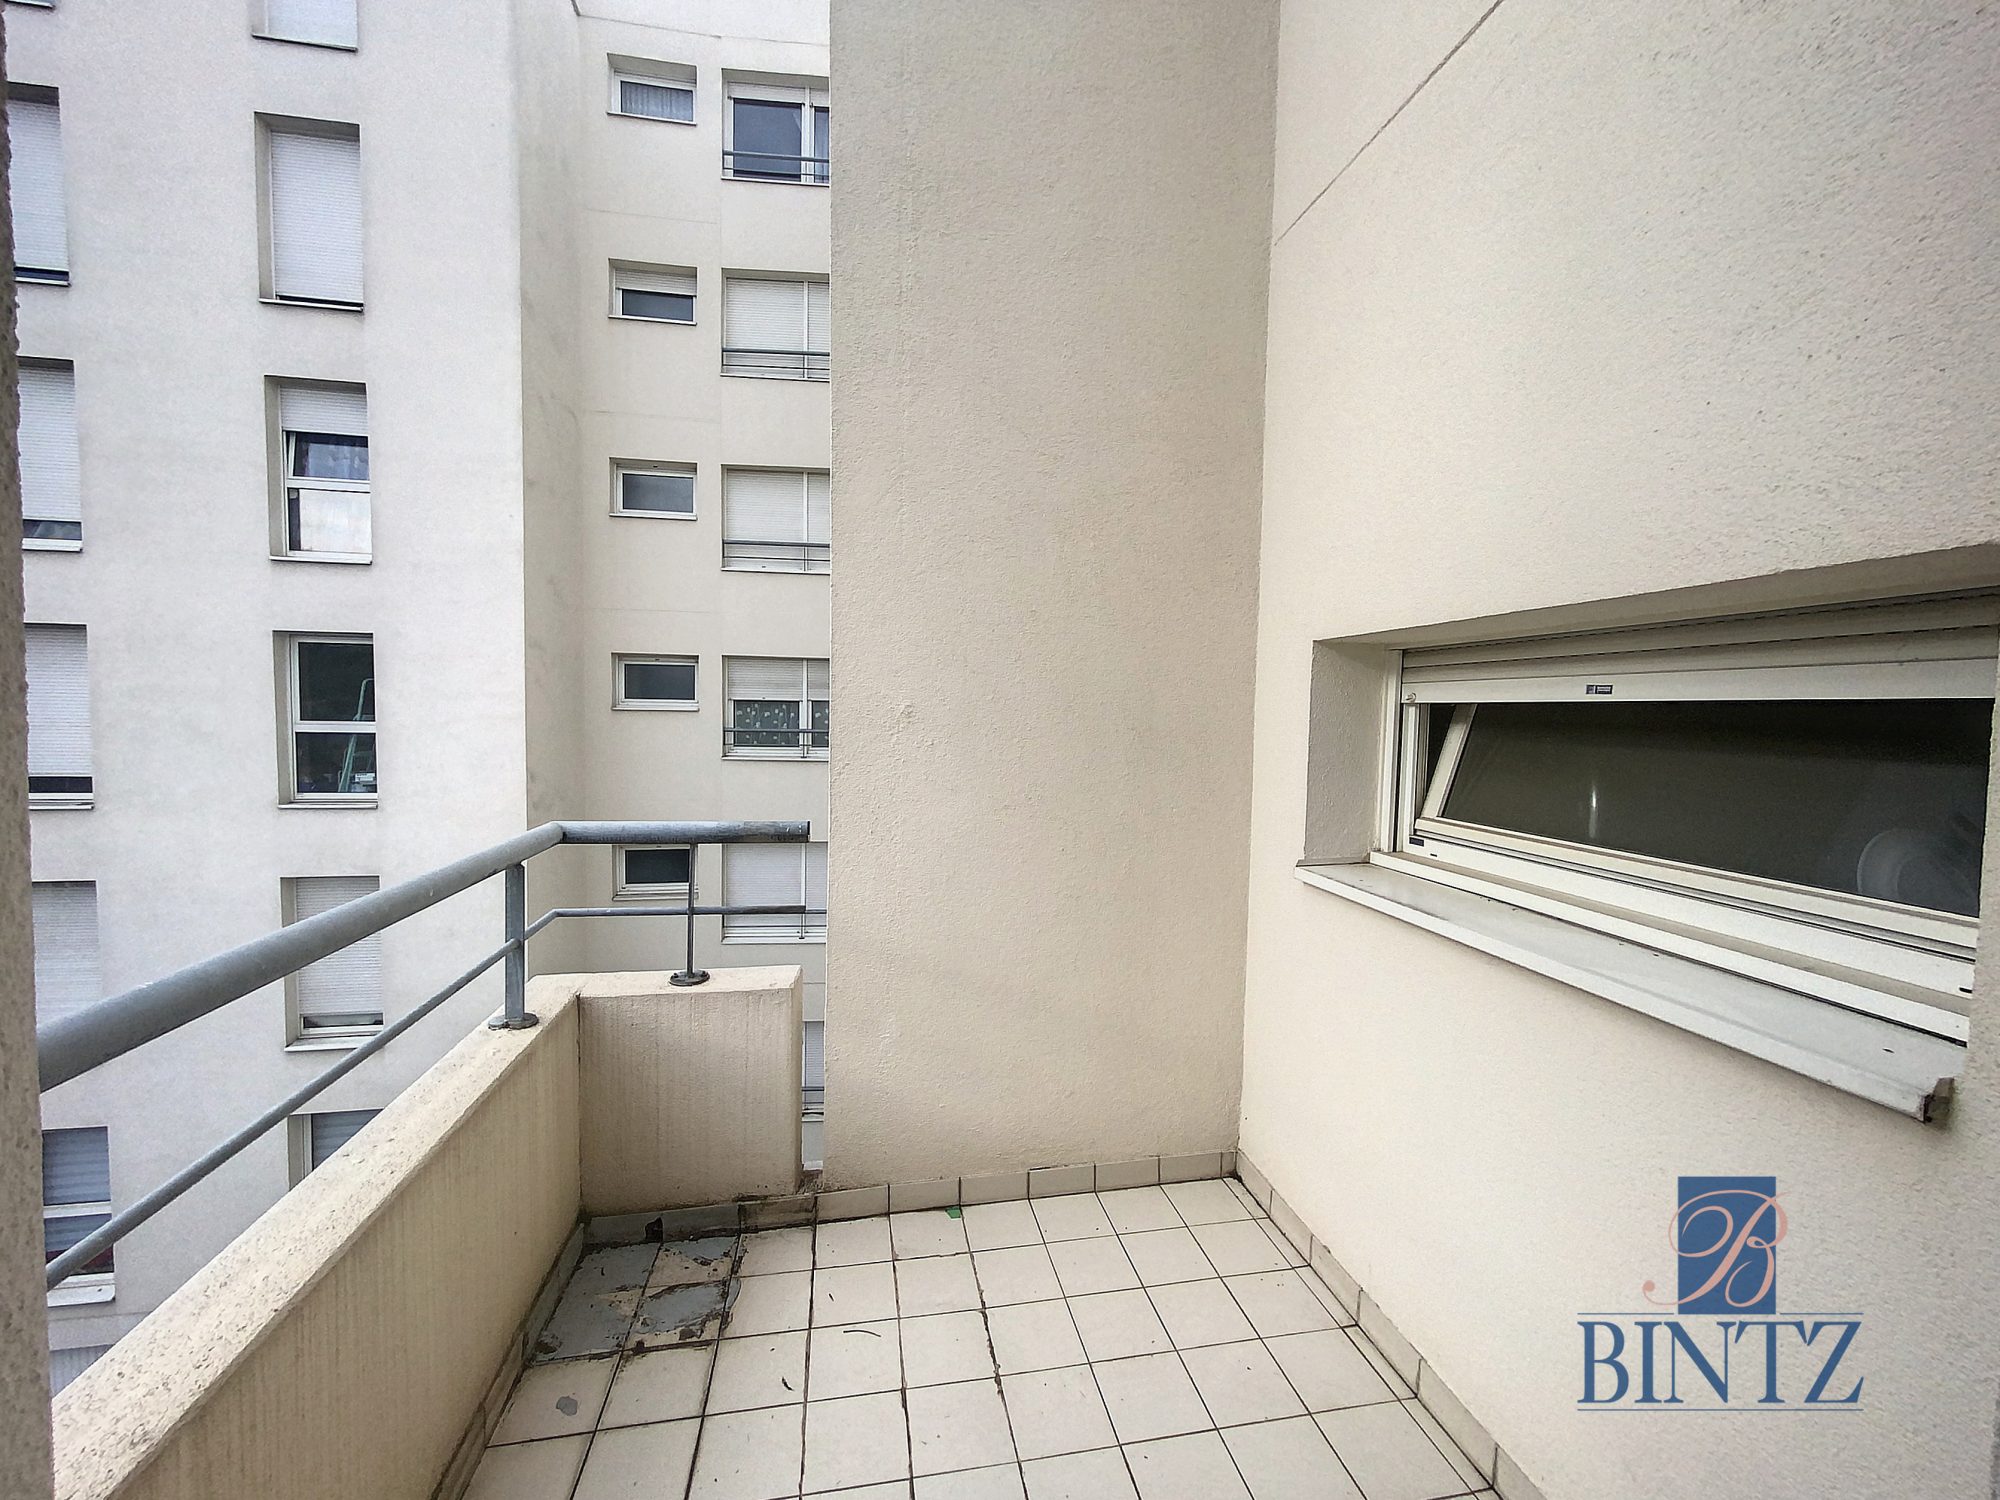 2 pièces de 43,53m2 – Investissement locatif - achat appartement Strasbourg - Bintz Immobilier - 6